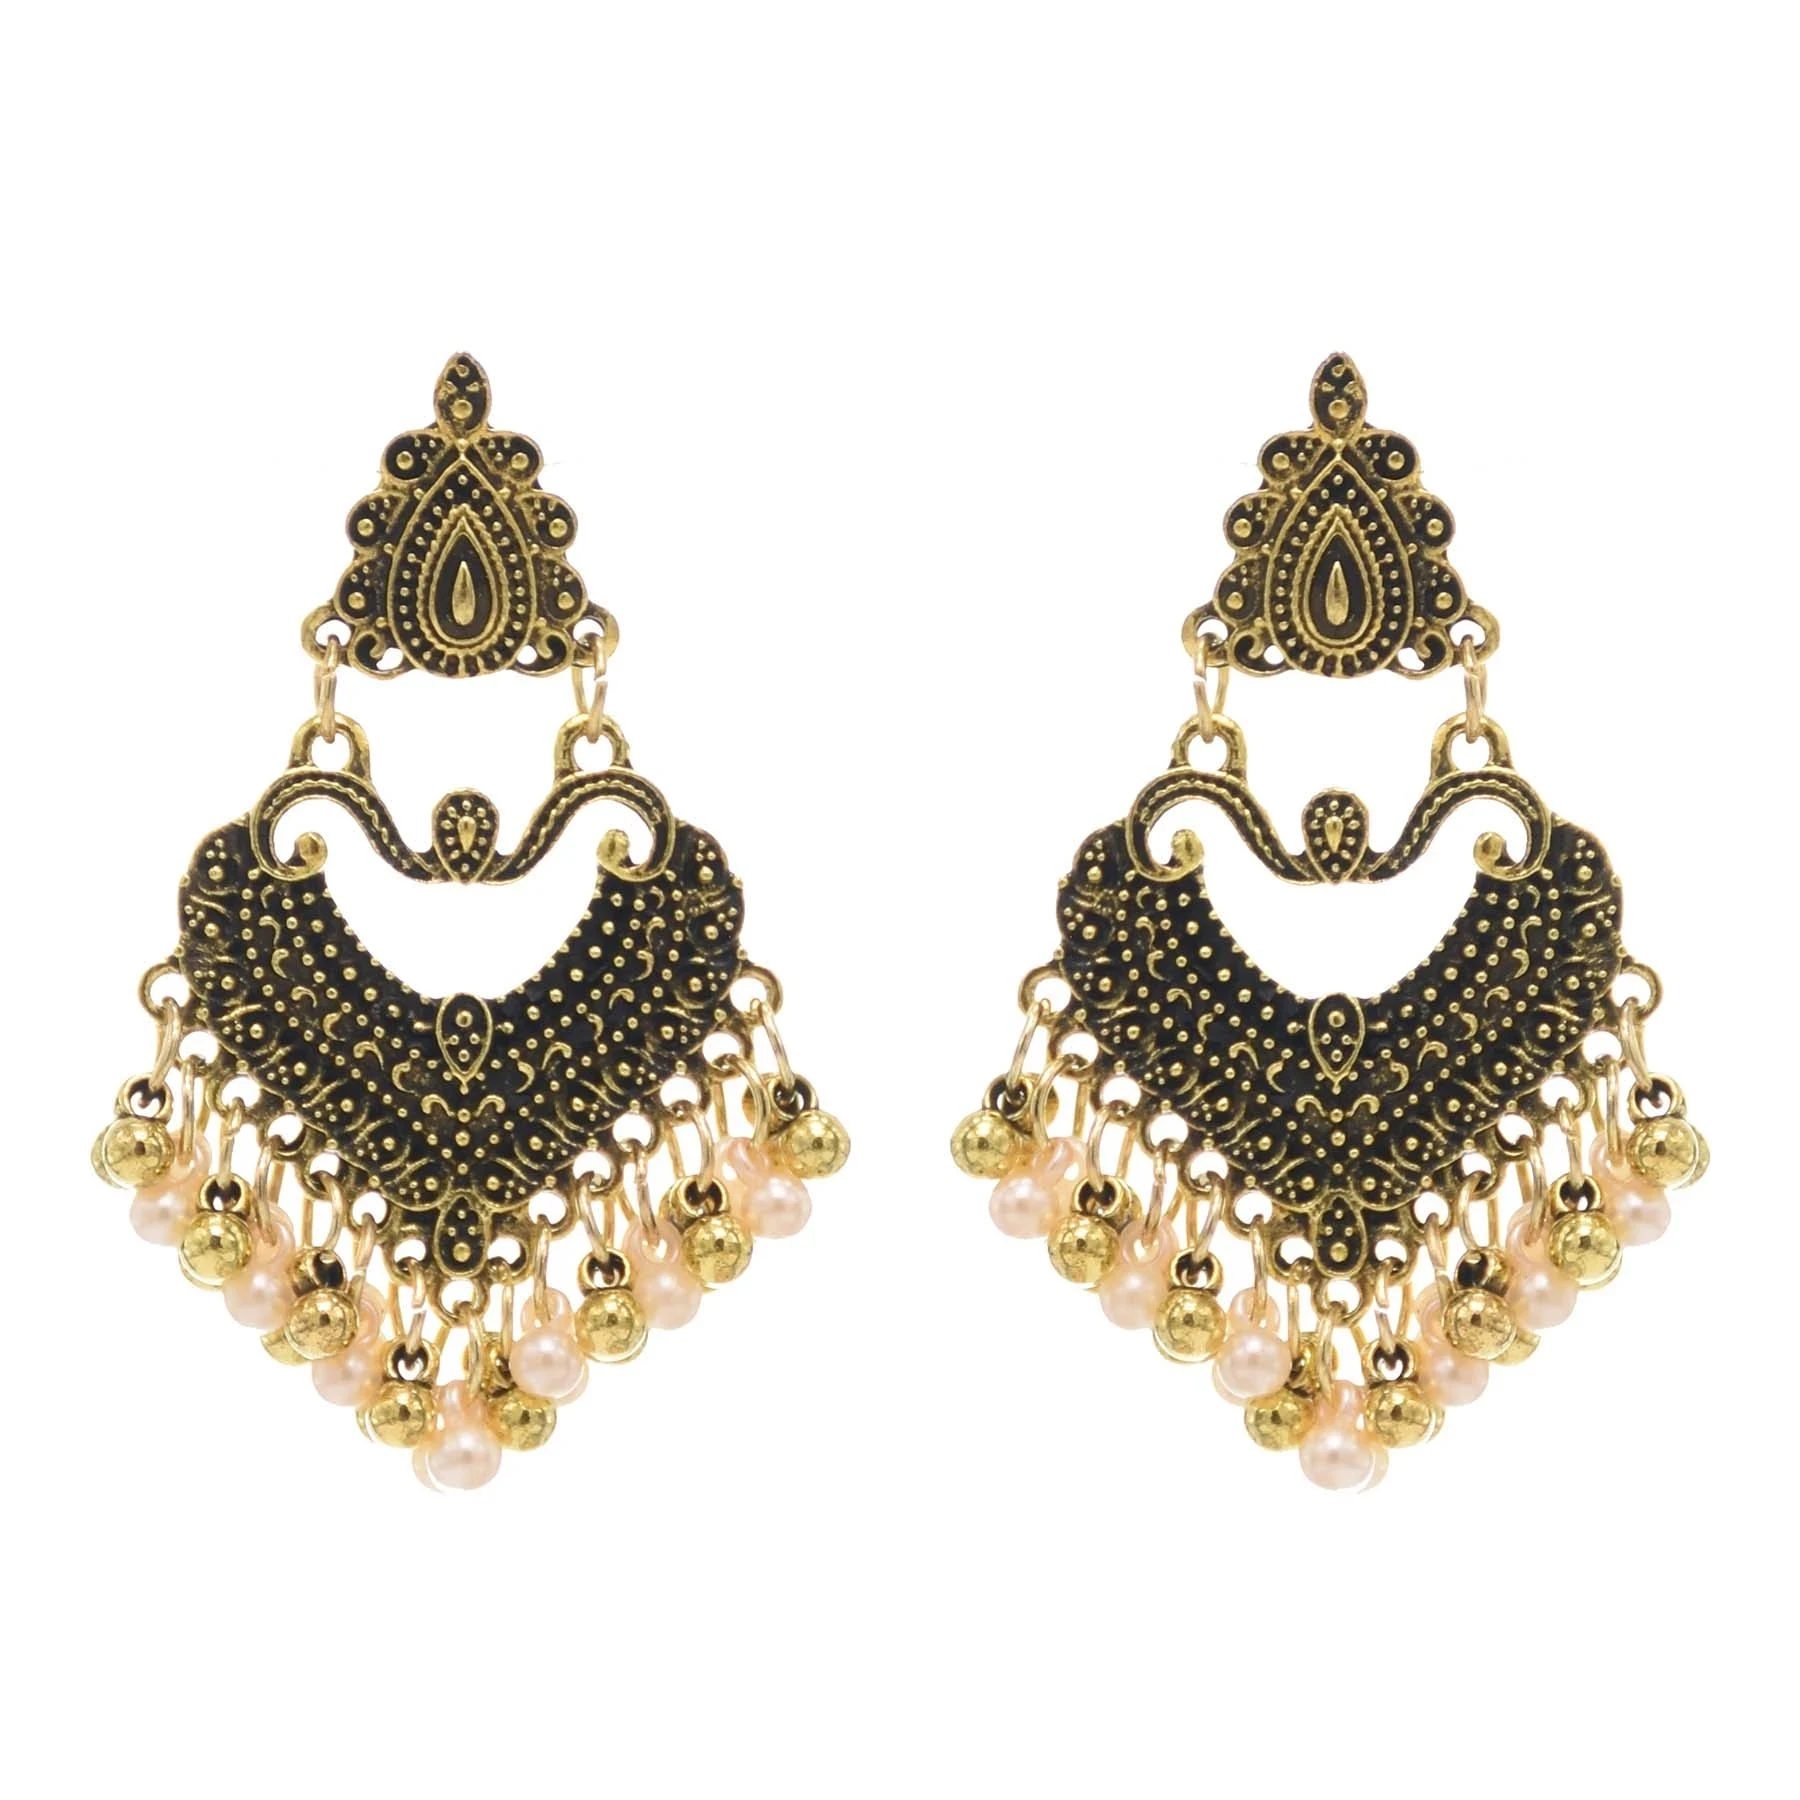 

Vintage Ethnic Gold Color Indian Earrings Metal Carved Heart Pearl Bell Tassel Drop Earrings Gypsy Tribal Turkish Afghan Jewelry